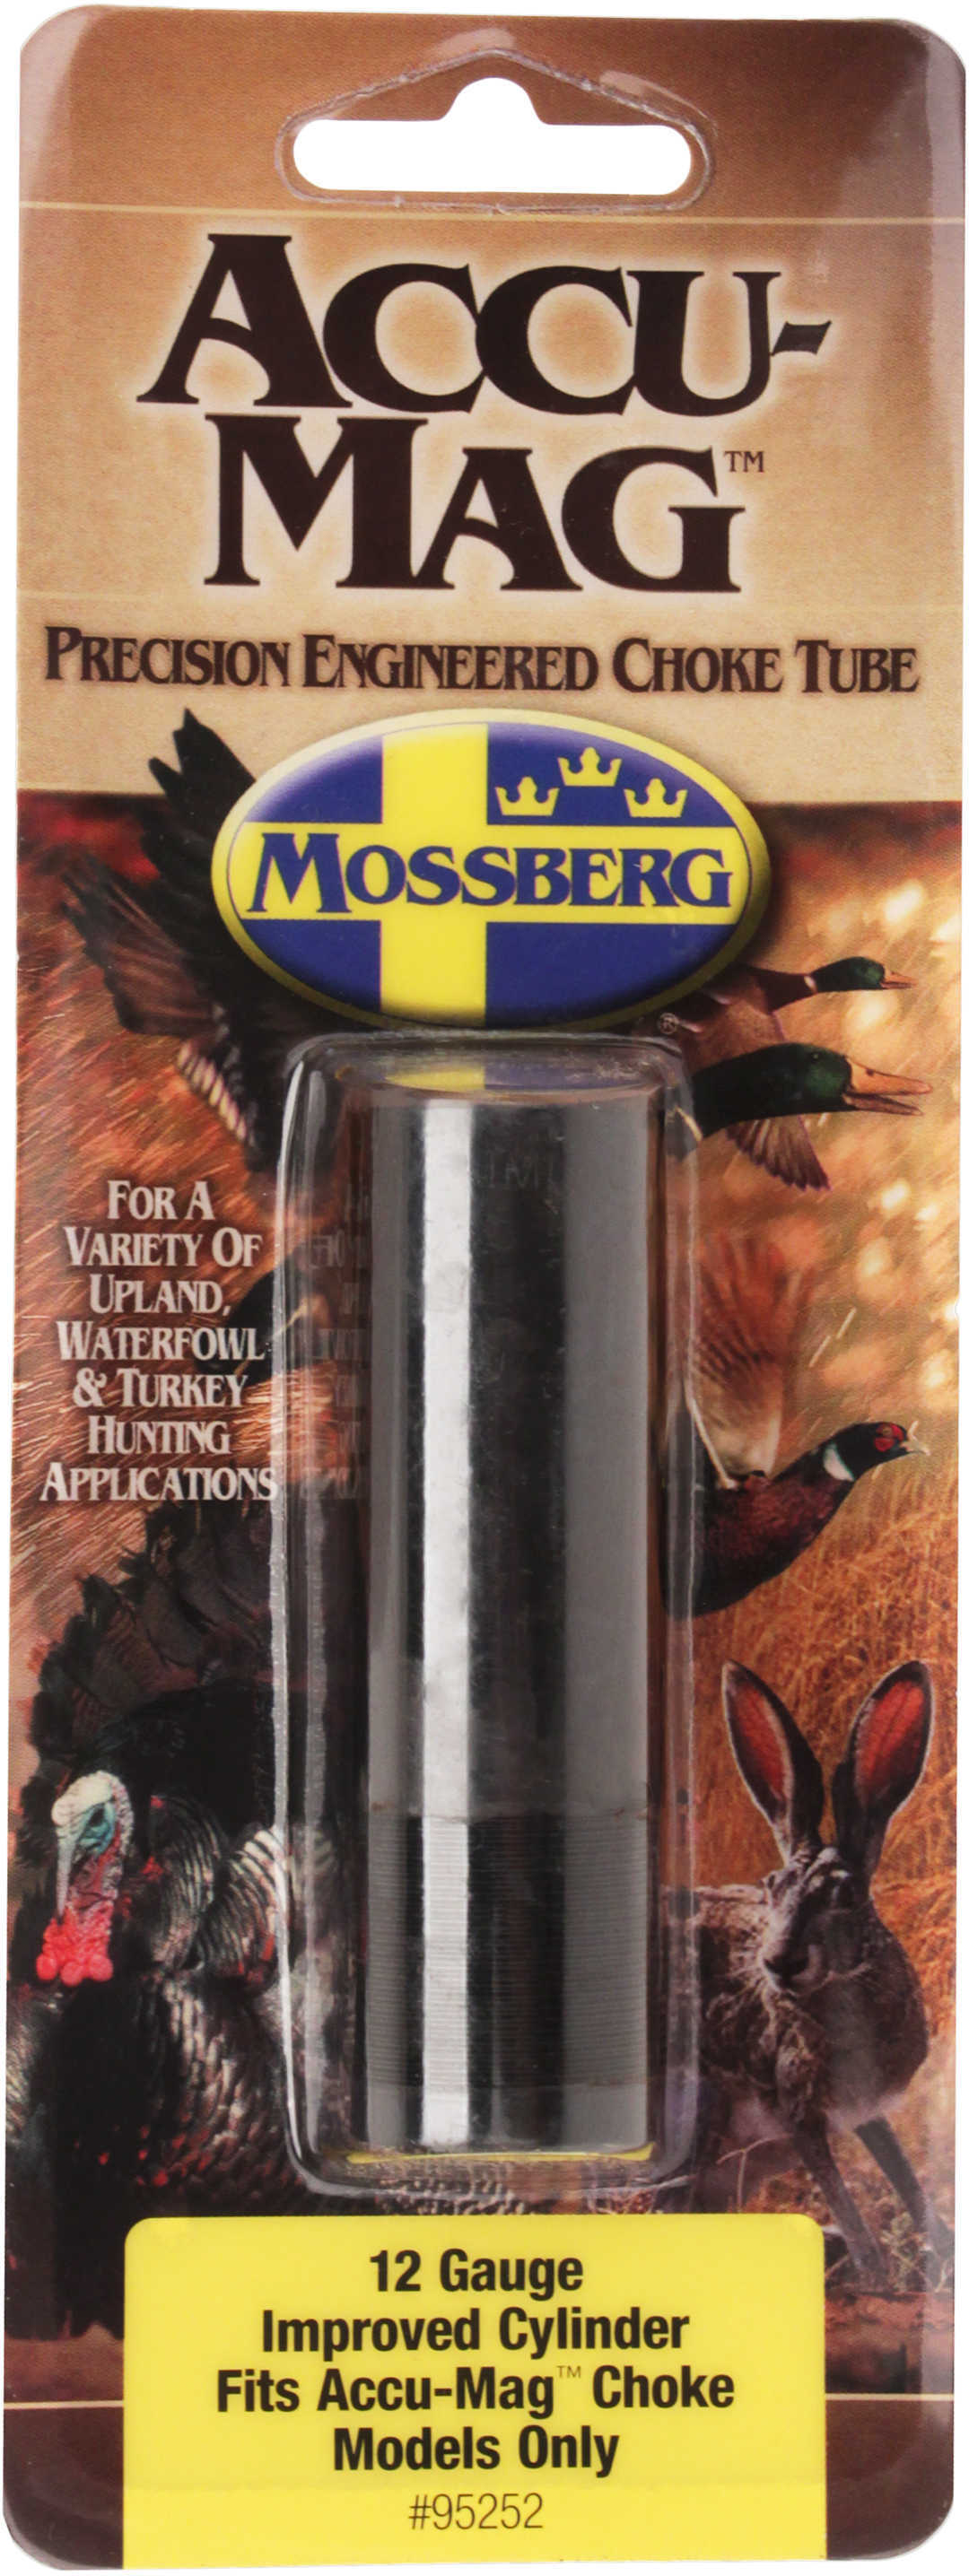 Mossberg Accu-Mag Choke Tube 12 Gauge Improved Cylinder